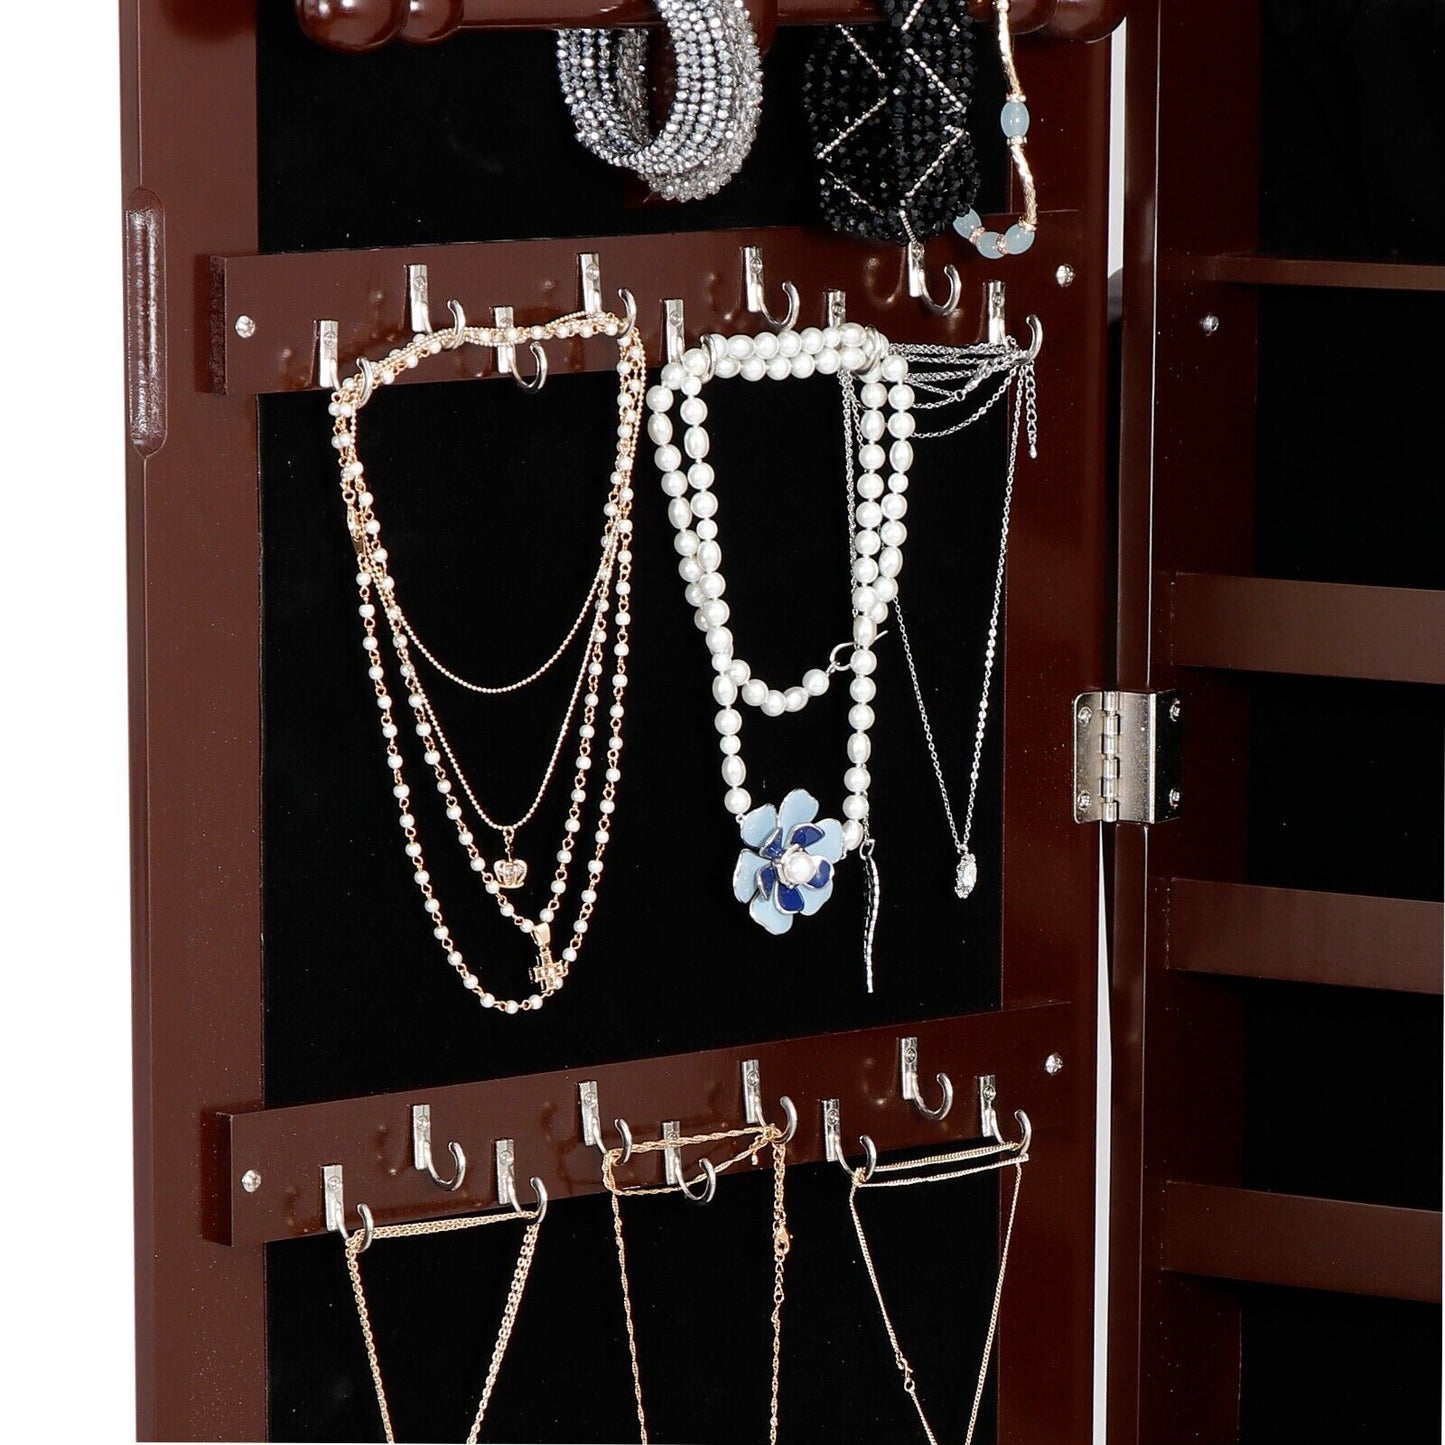 Free Standing Jewelry Cabinet Mirror Armoire Organizer Storage Lockable  Brown